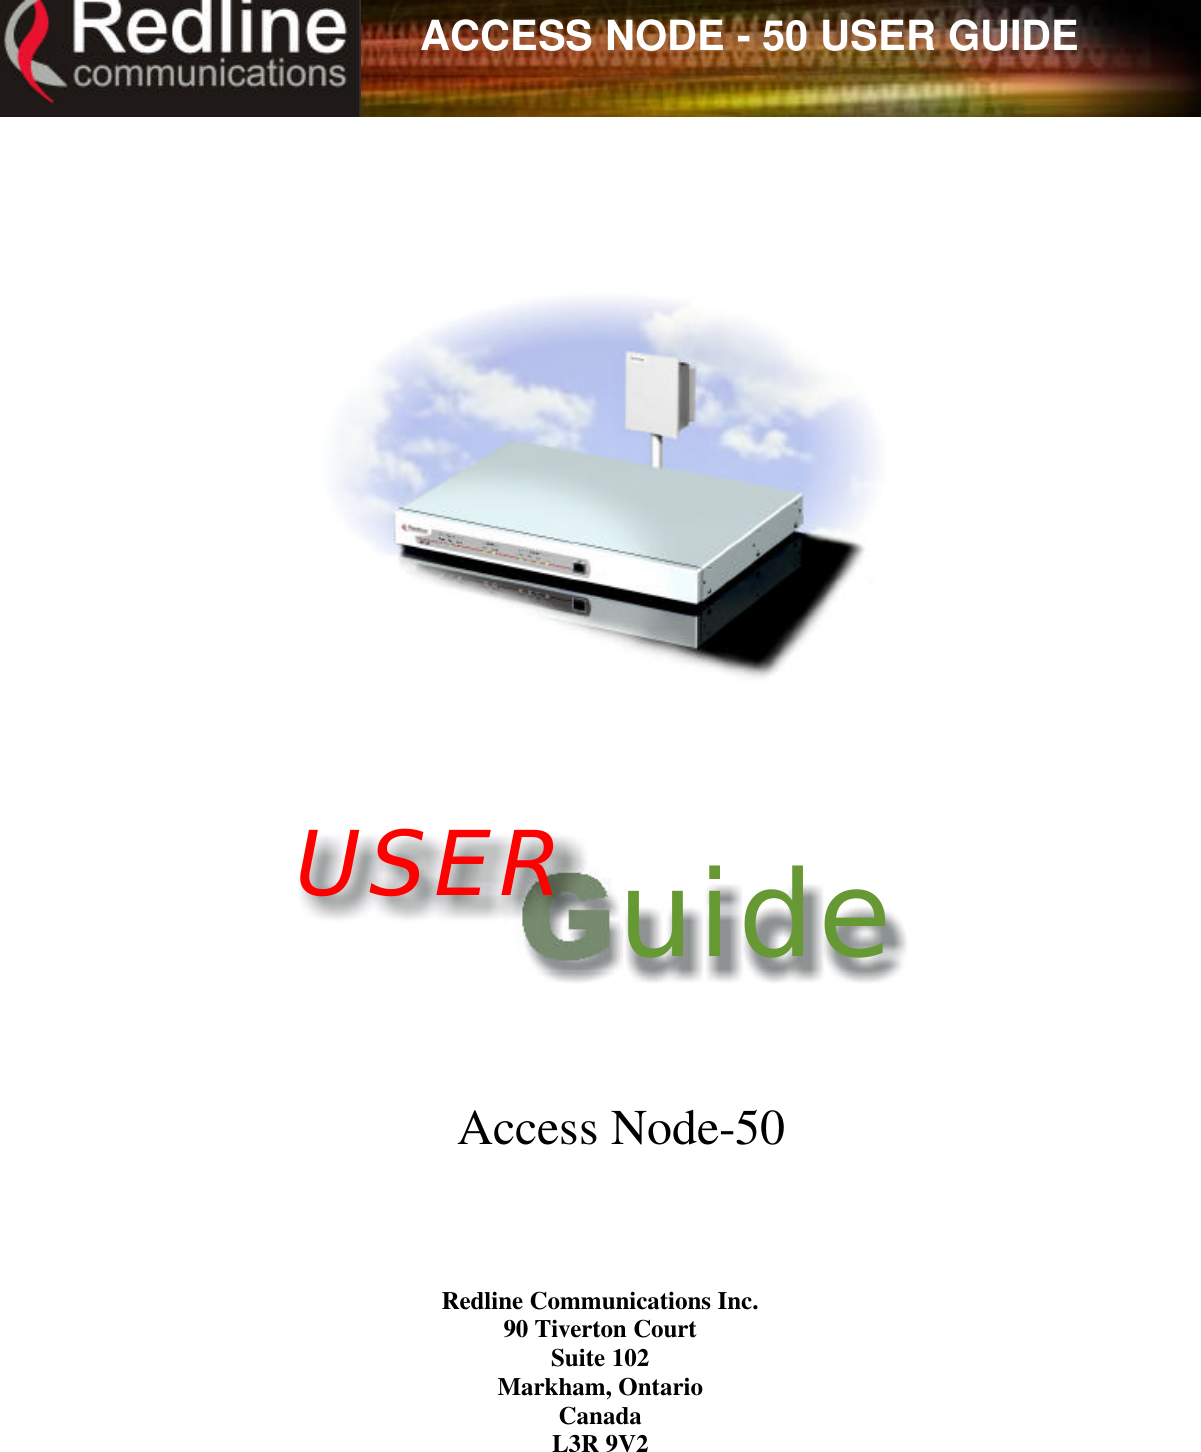           GuideUSER      Access Node-50     Redline Communications Inc. 90 Tiverton Court Suite 102 Markham, Ontario Canada L3R 9V2 ACCESS NODE - 50 USER GUIDE 